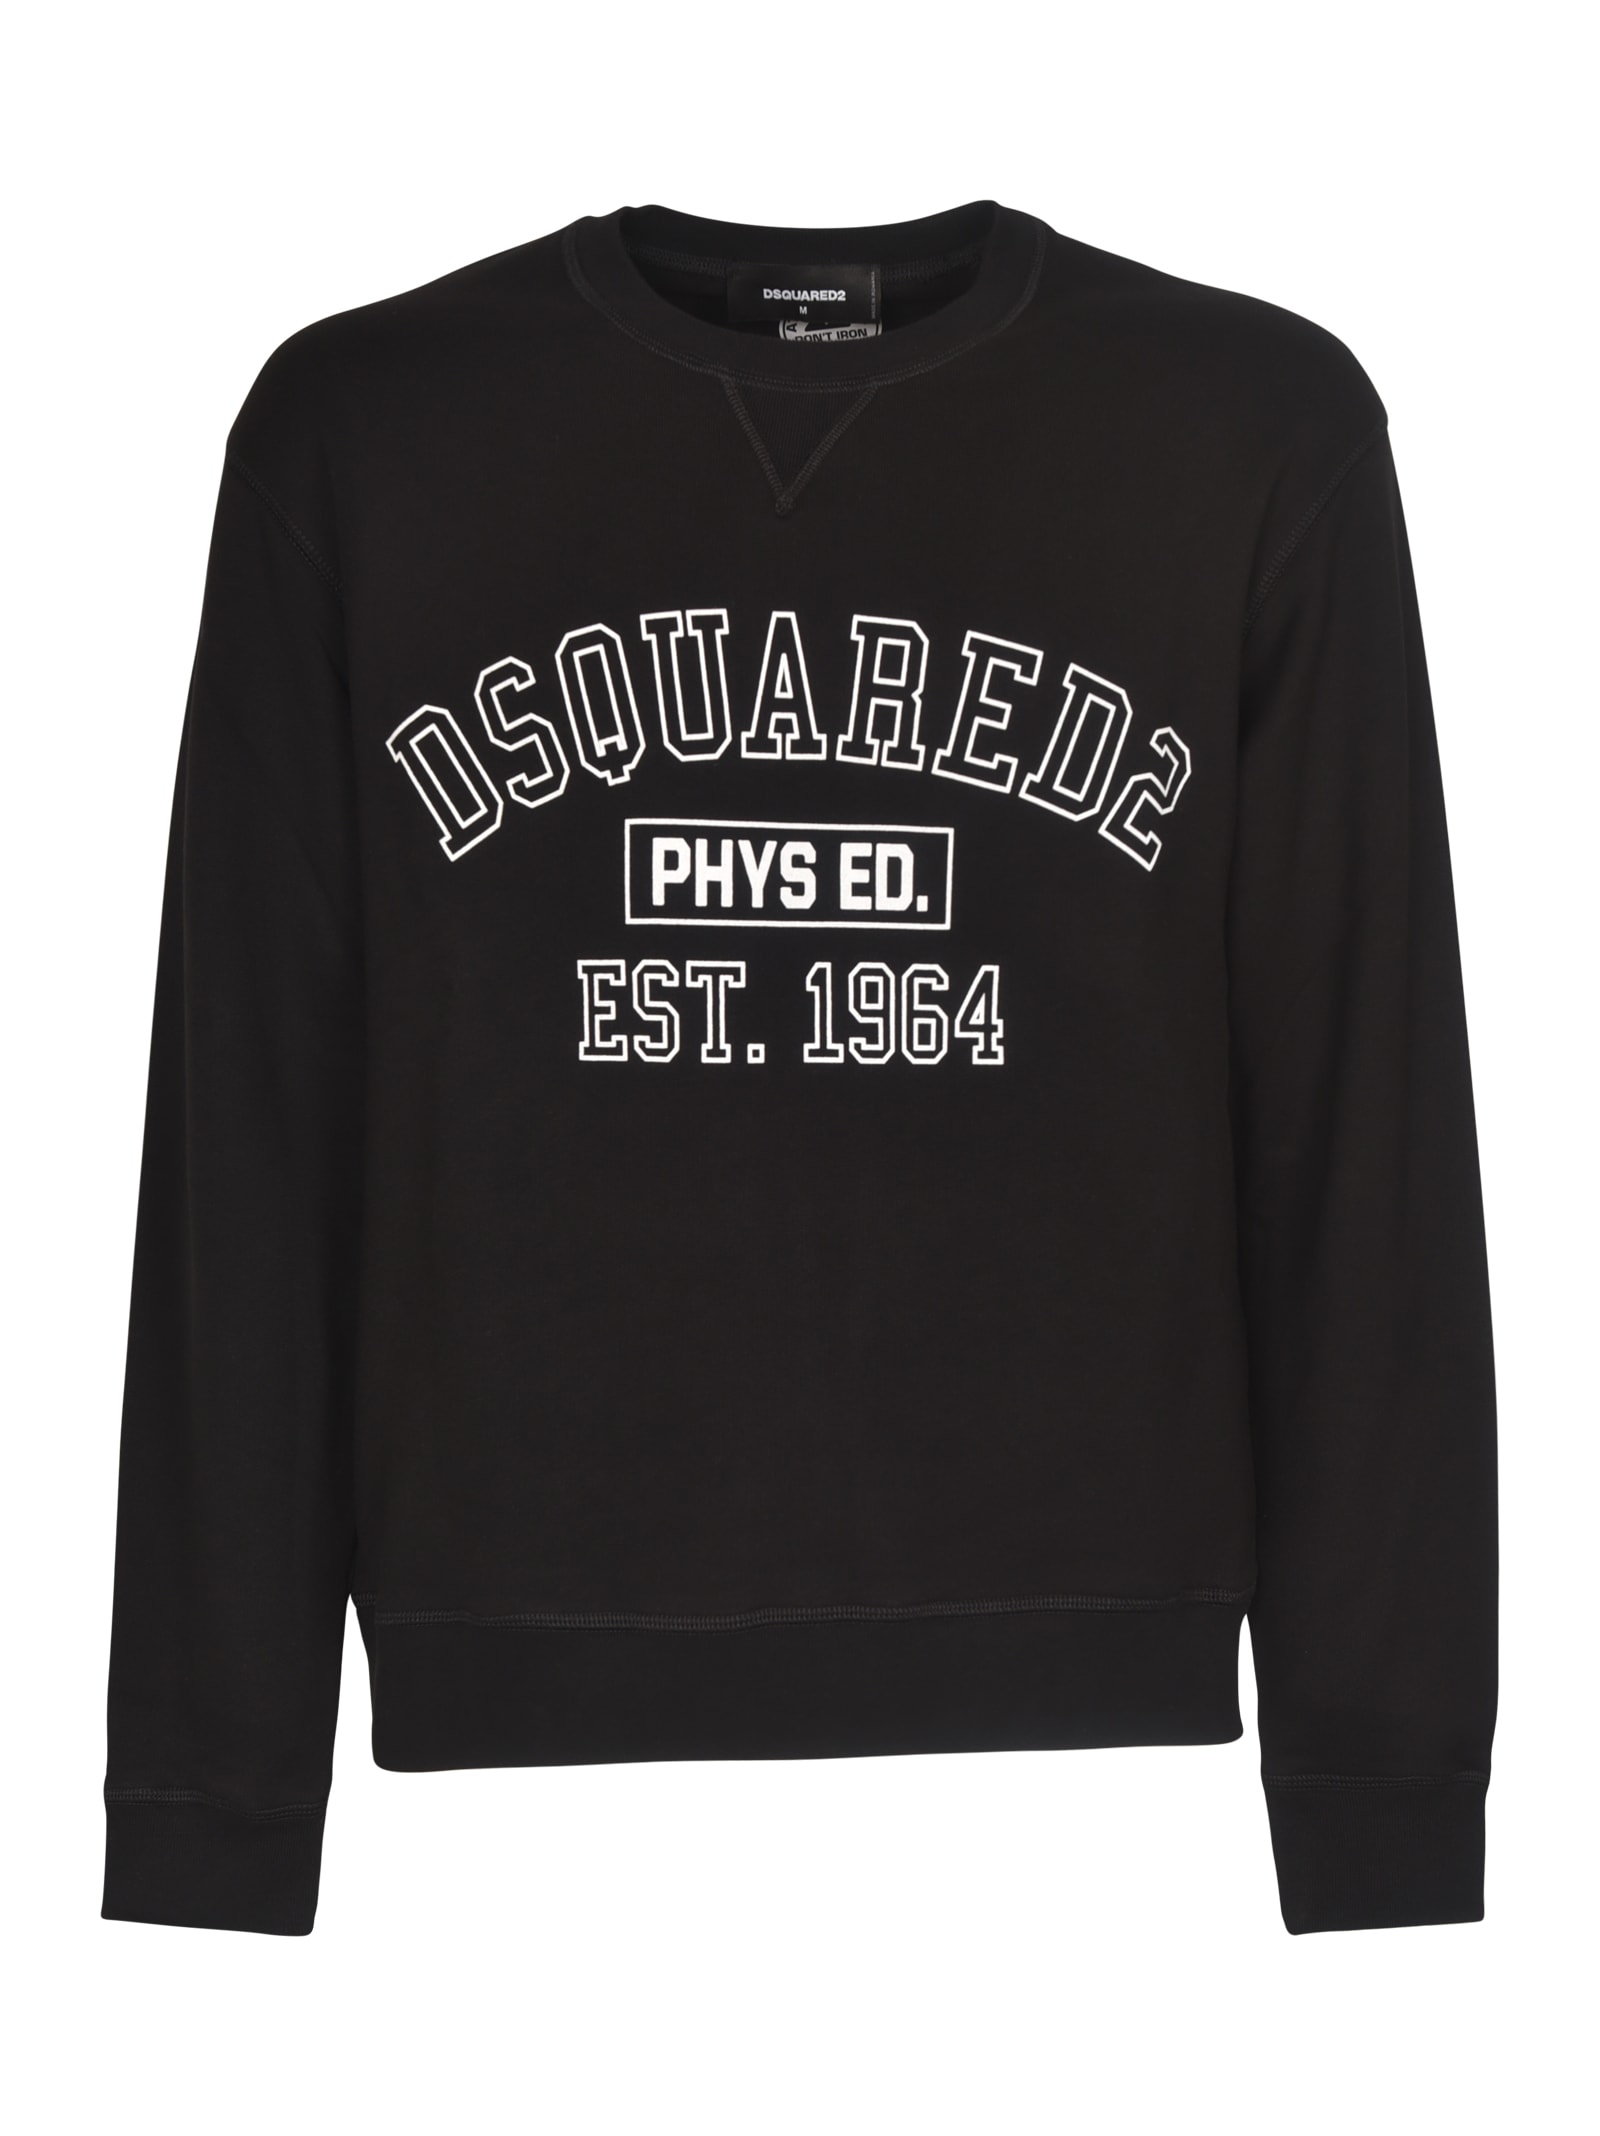 Dsquared2 Phys Ed. Sweatshirt